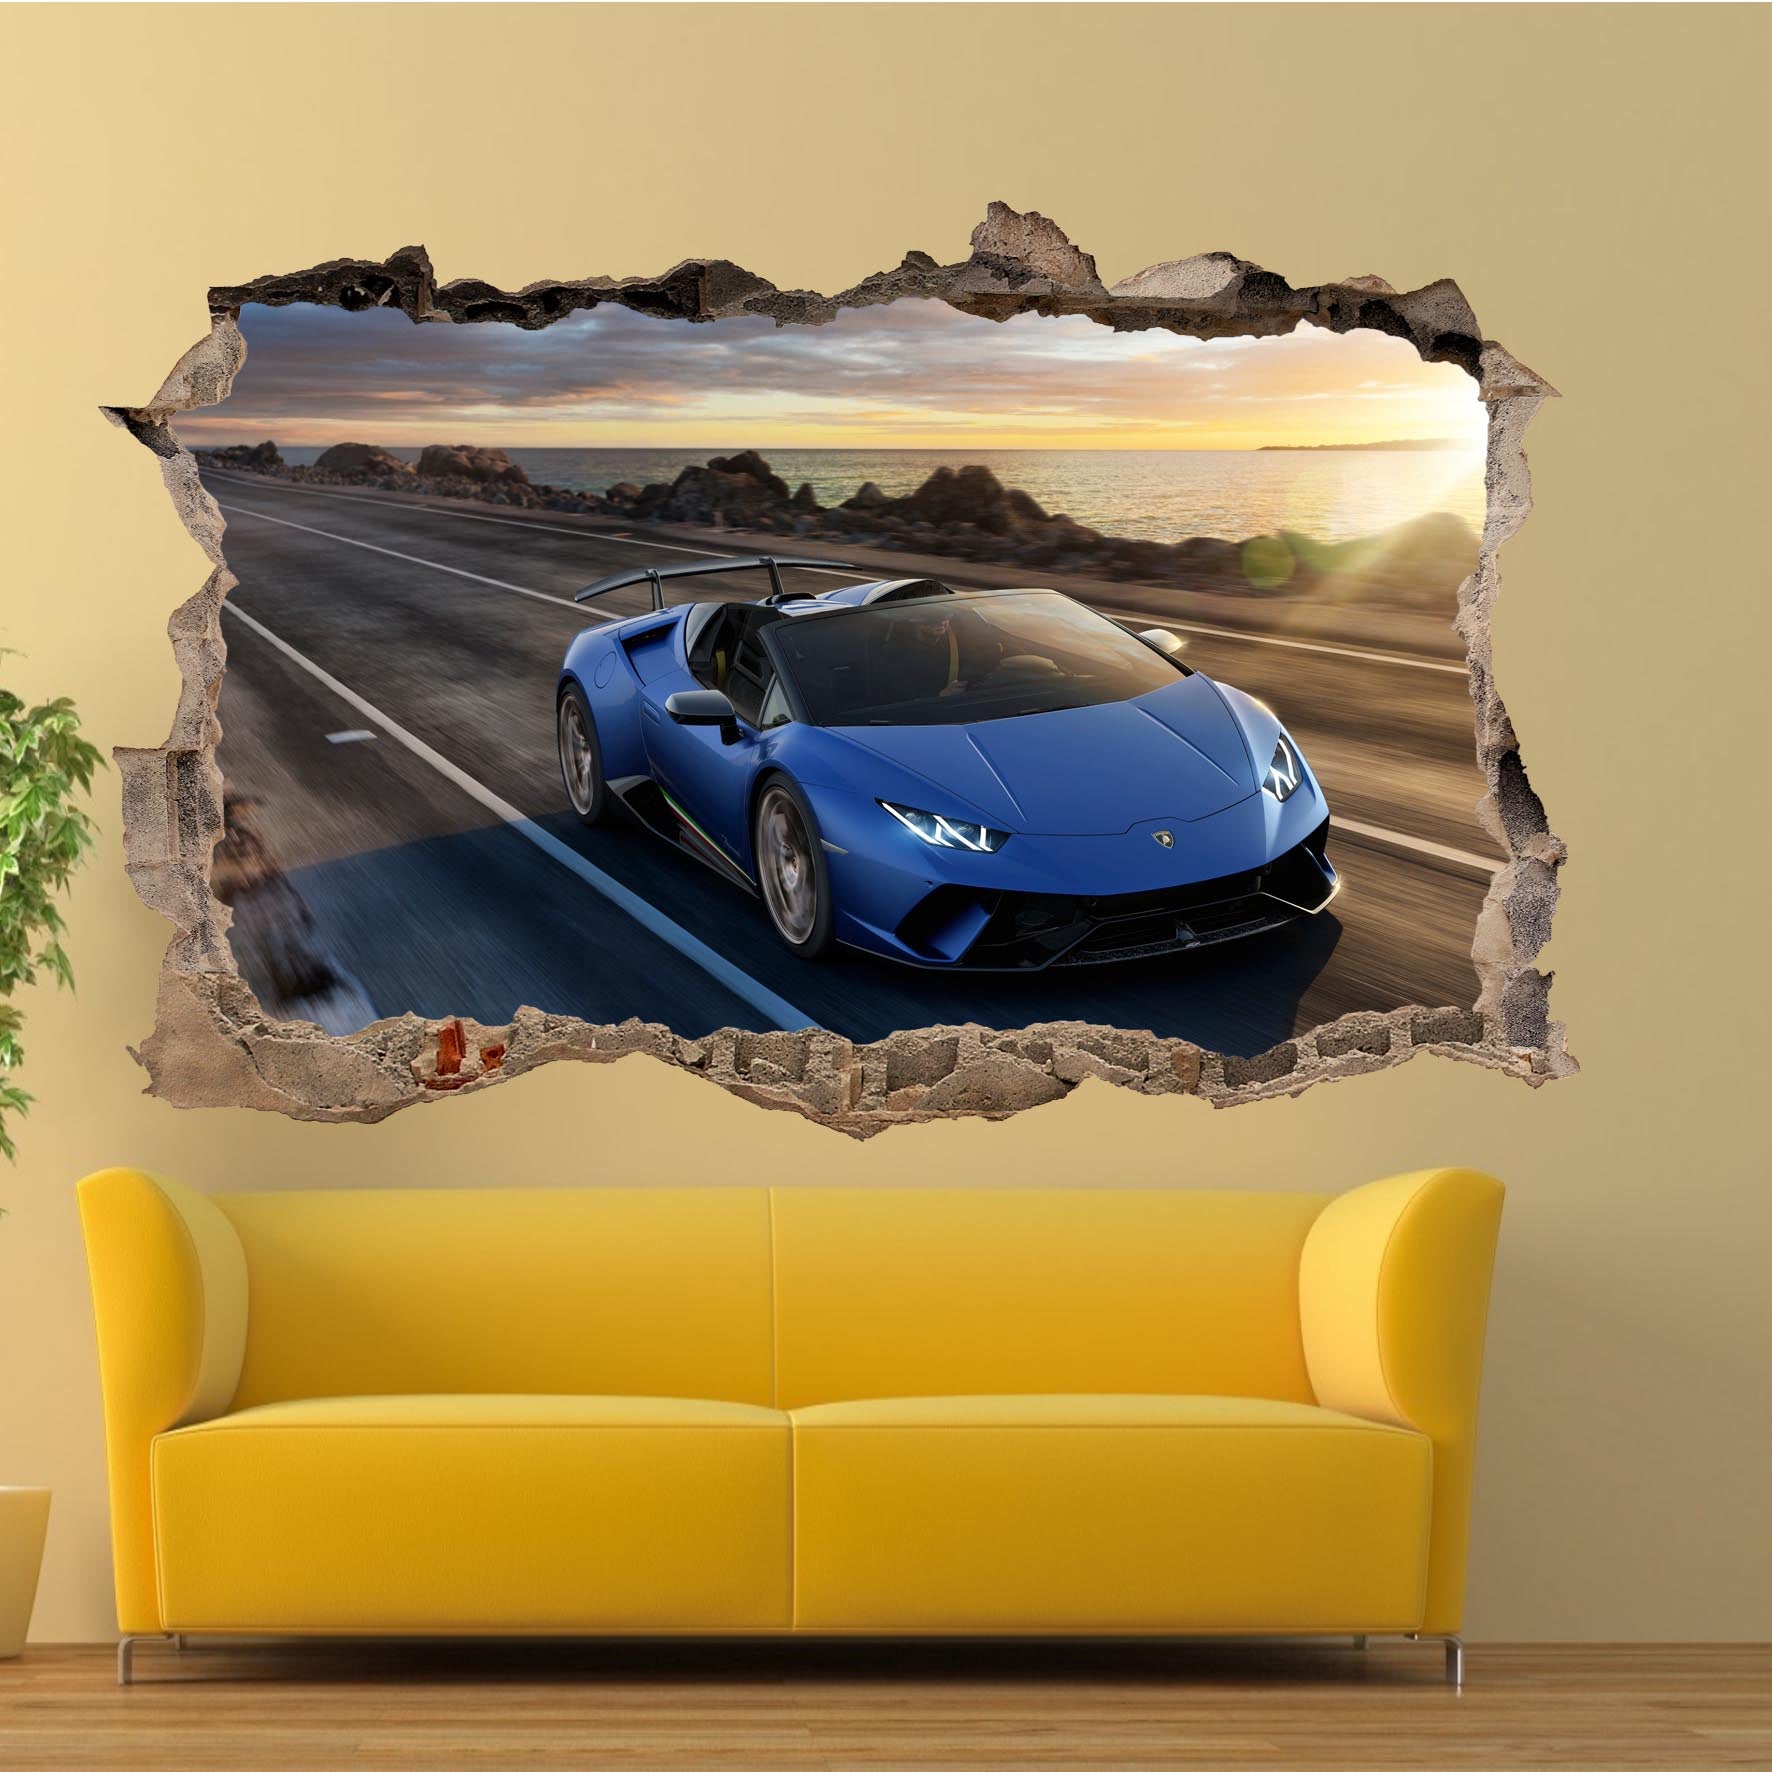 Lamborghini Huracan super car poster wall sticker mural decal